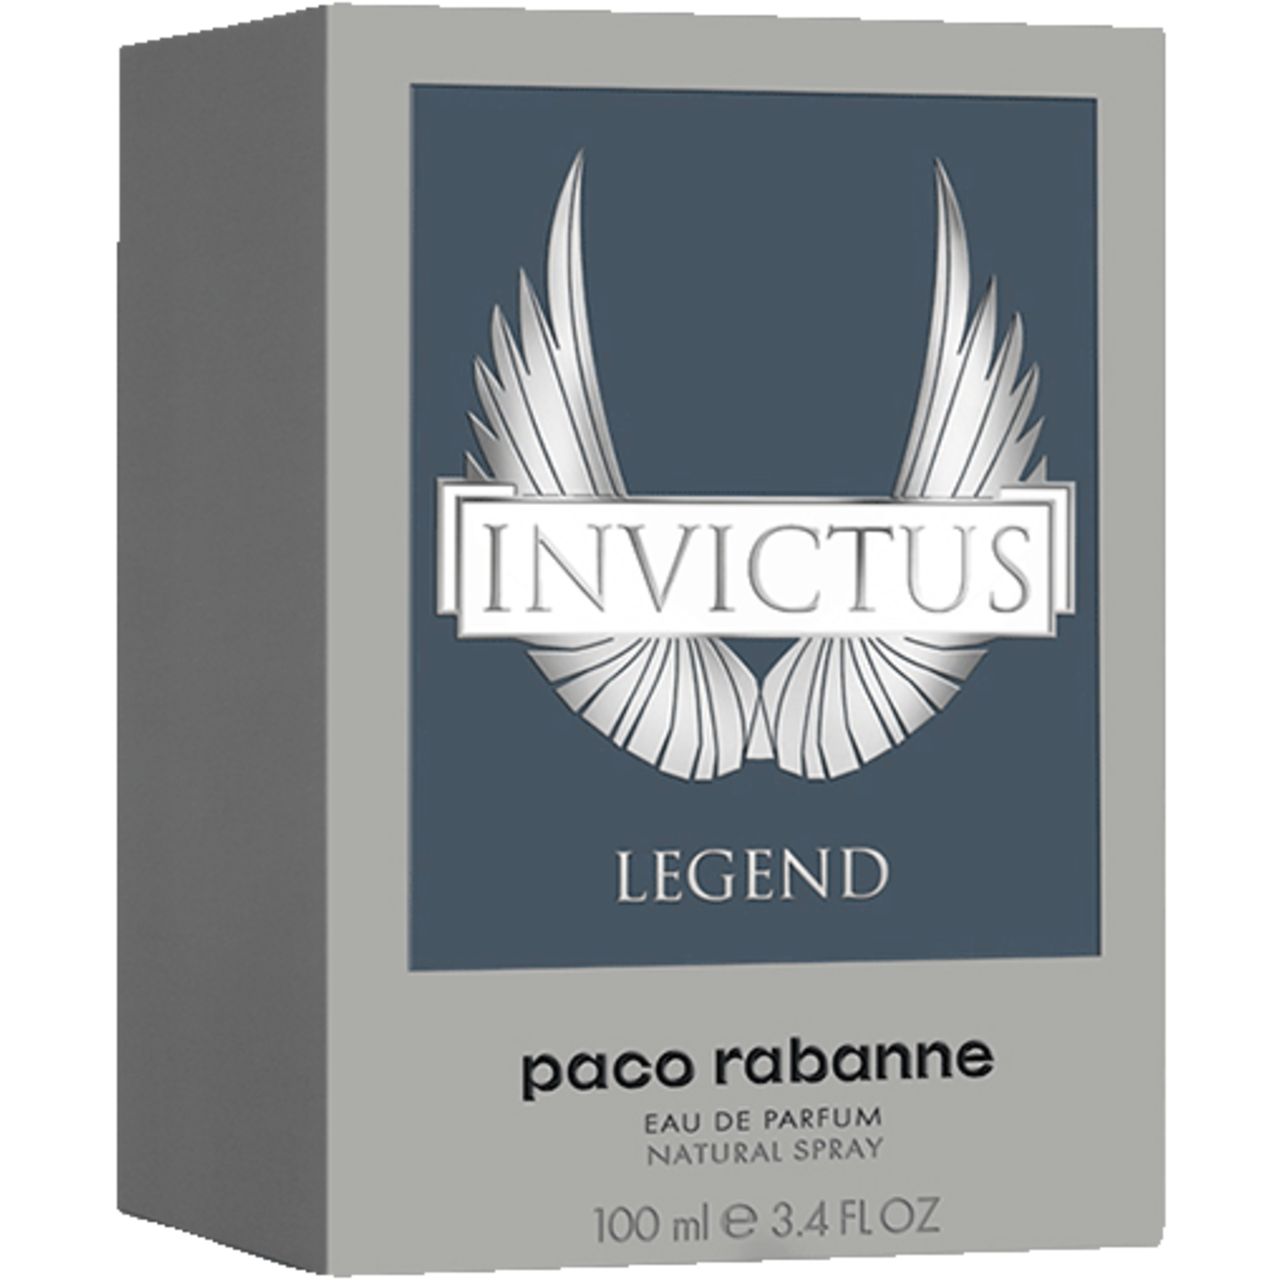 Paco Rabanne, Invictus Legend E.d.P. Nat. Spray